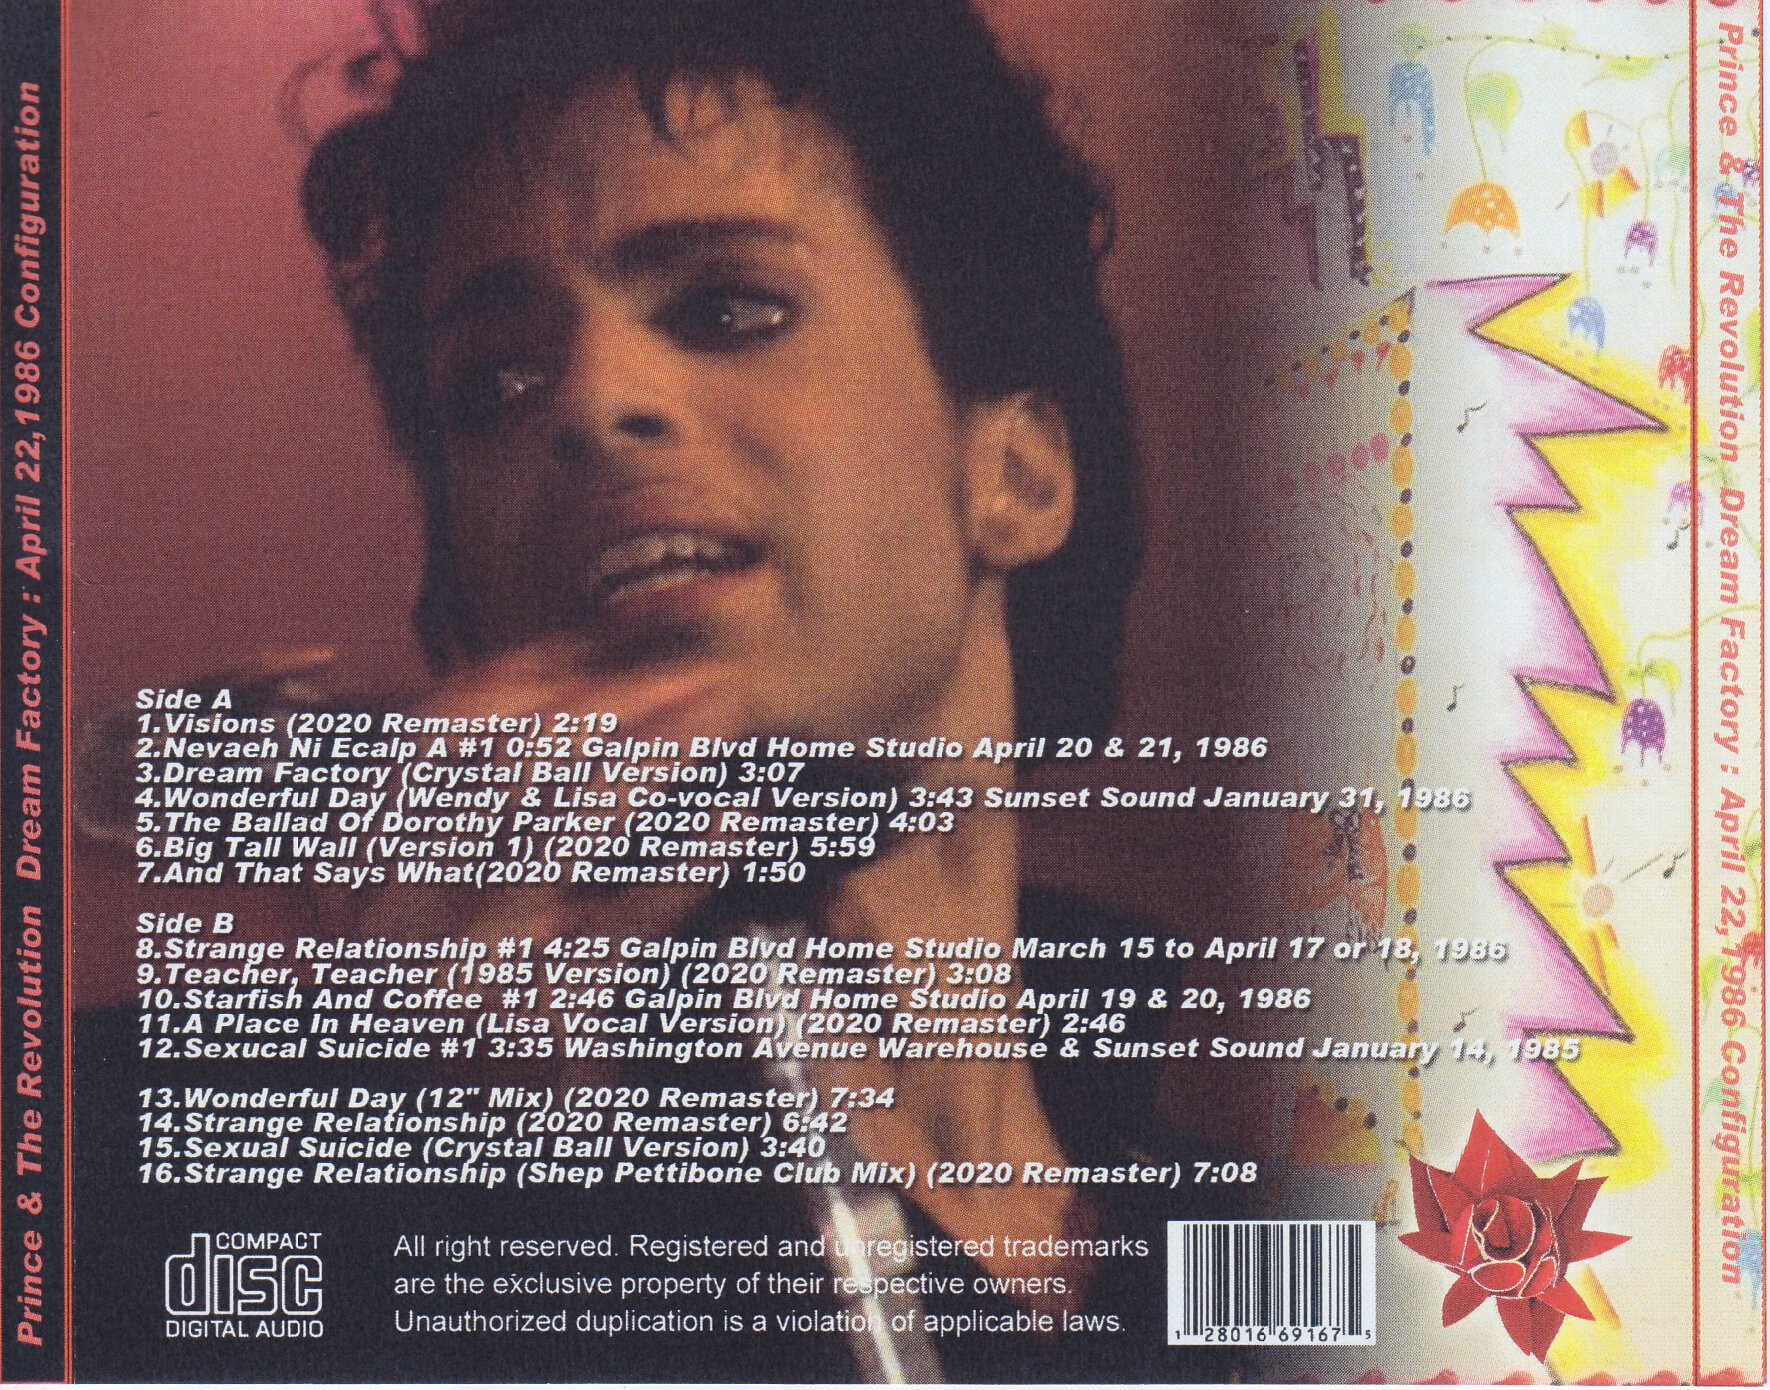 Prince & The Revolution / Dream Factory April 22 1986